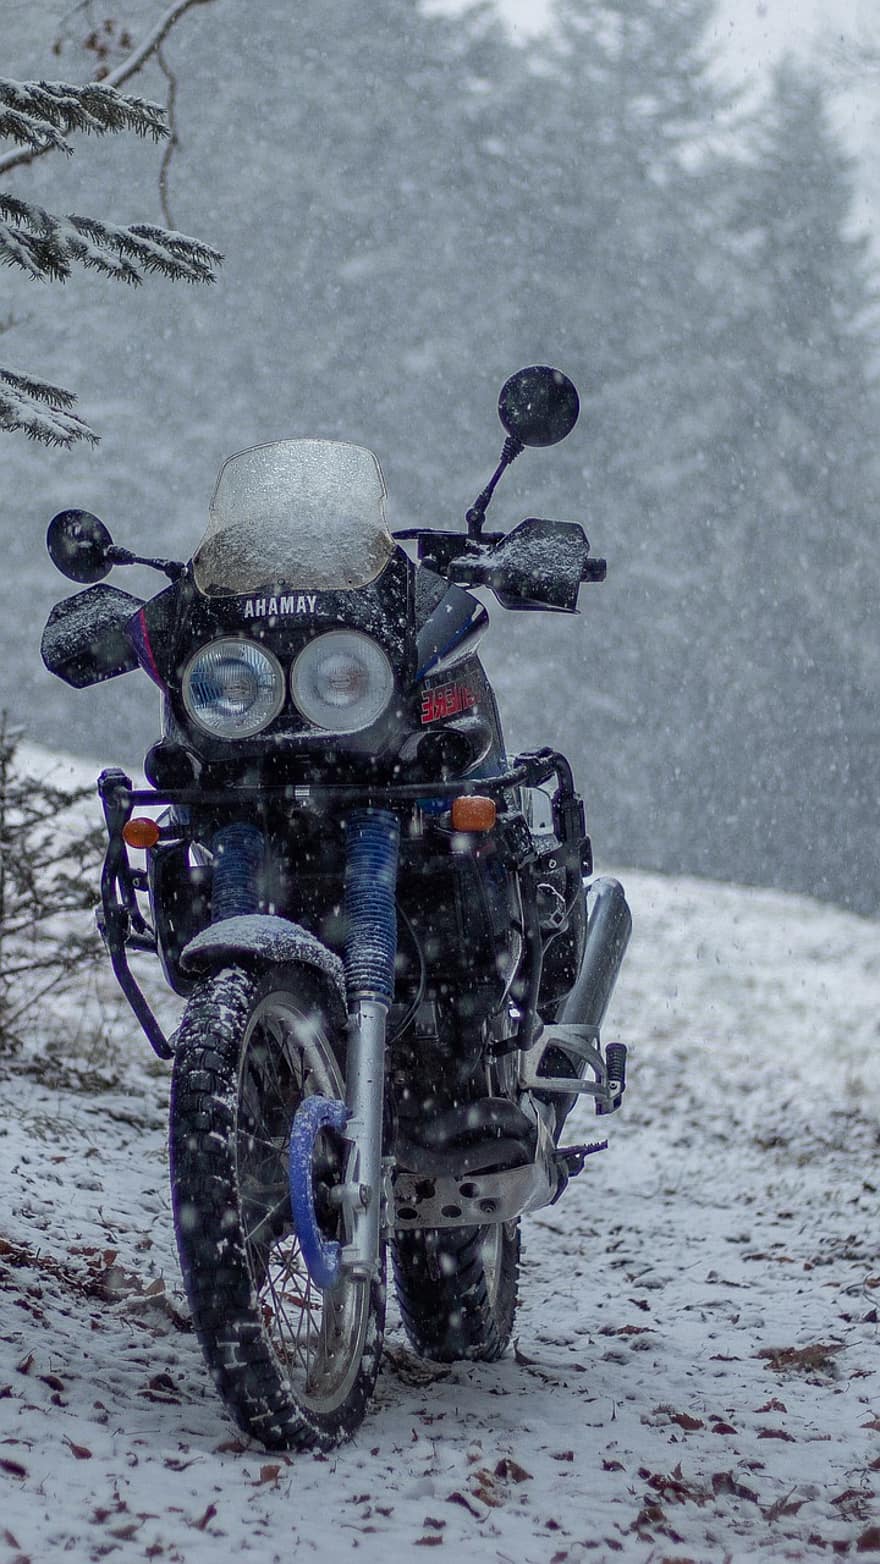 moto, hivern, temporada, neu, esport, Esports extrems, velocitat, transport, aventura, motor, carreres de motos